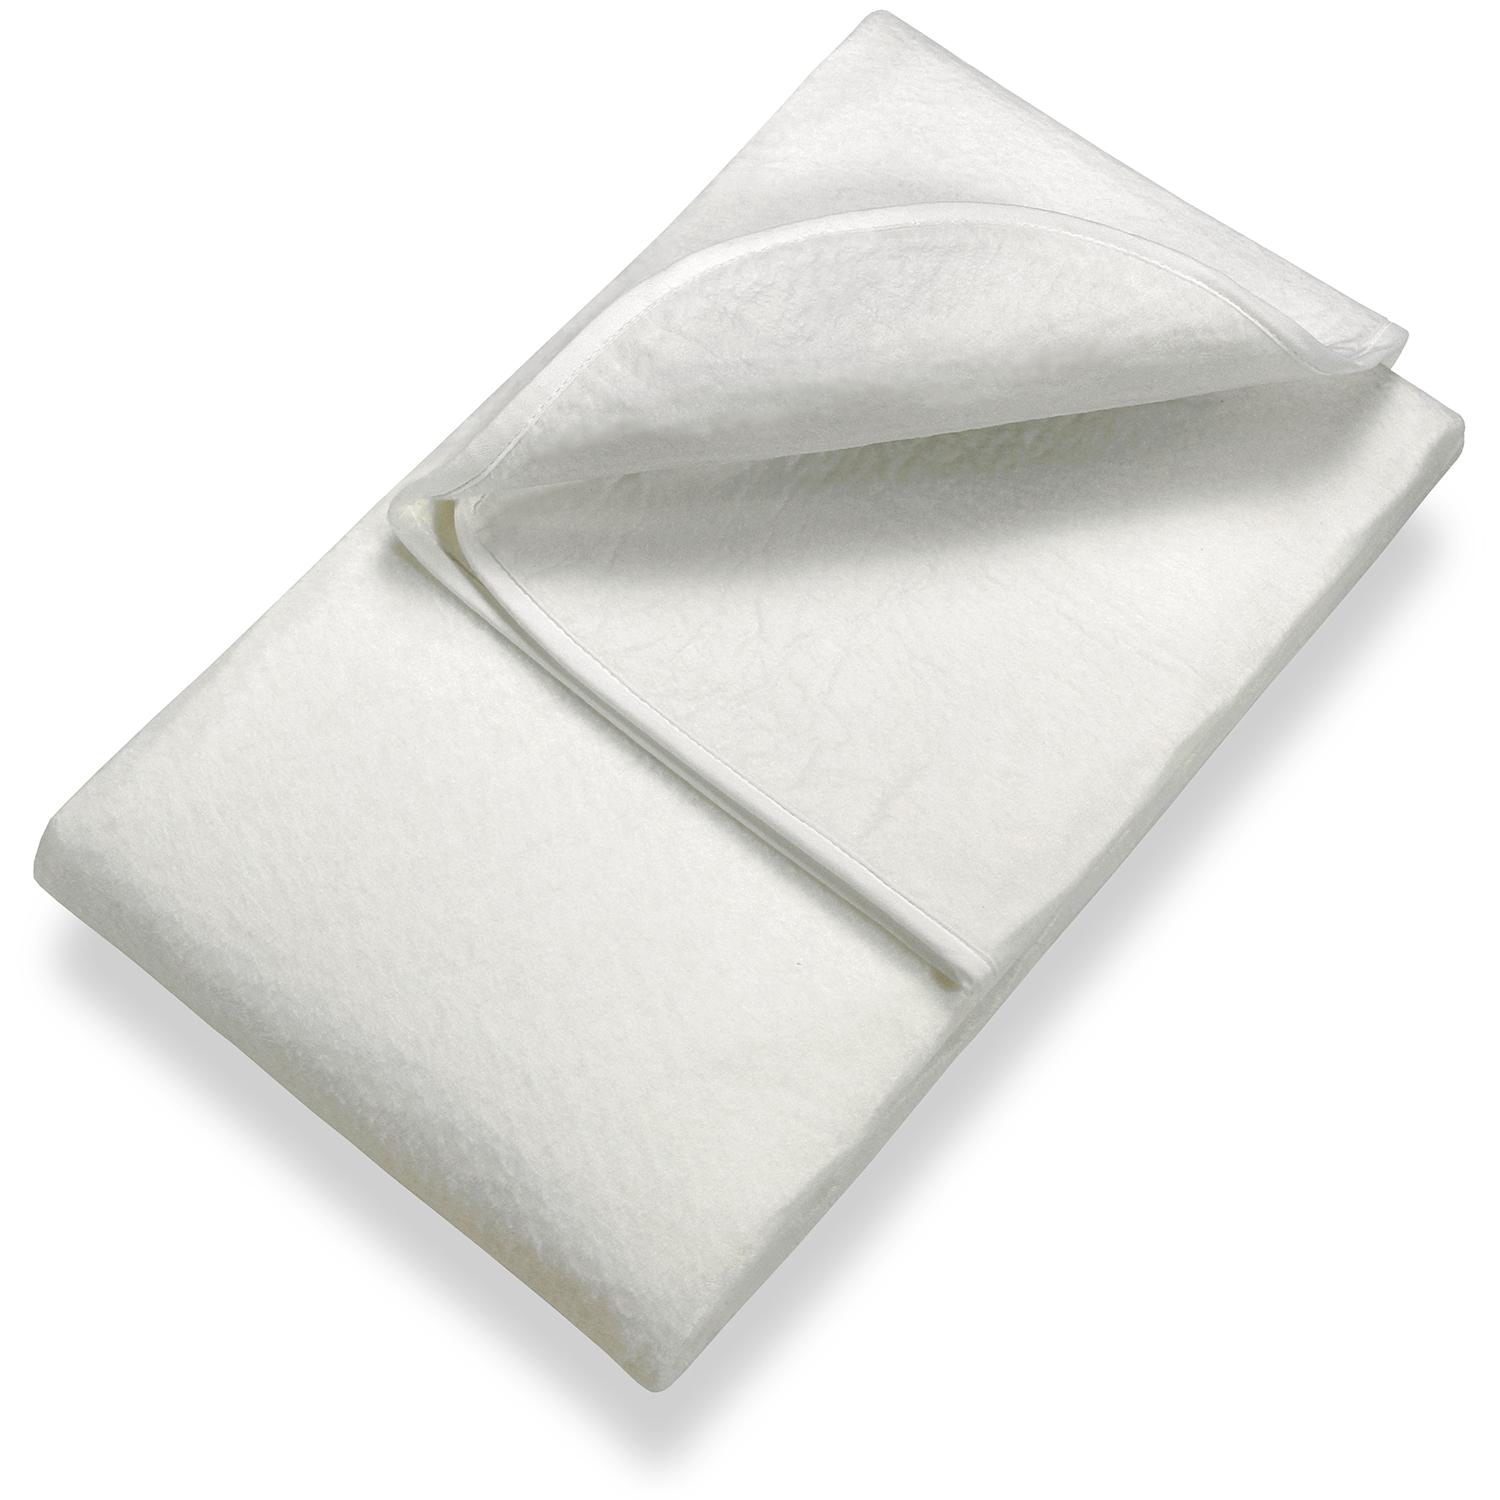 Sleezzz Basic rullemadras i nålefilt 160 x 200 cm, madrasbeskytter til at lægge på lamelrammen, hvid